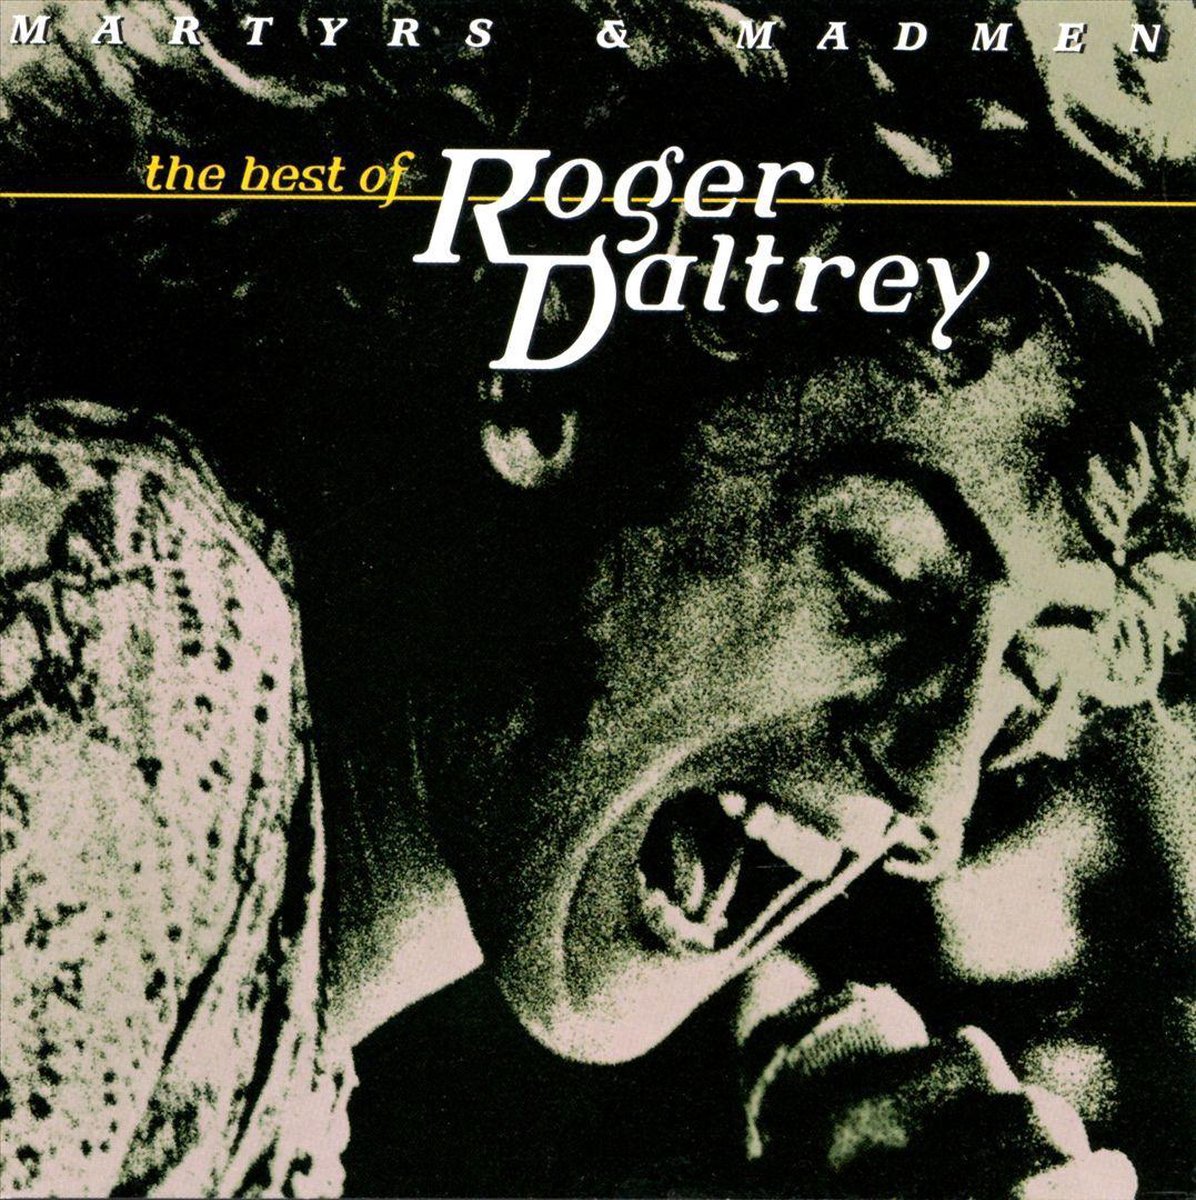 Roger Daltrey Martyrs Madmen The Best Of Roger Daltrey 1997 gnodde